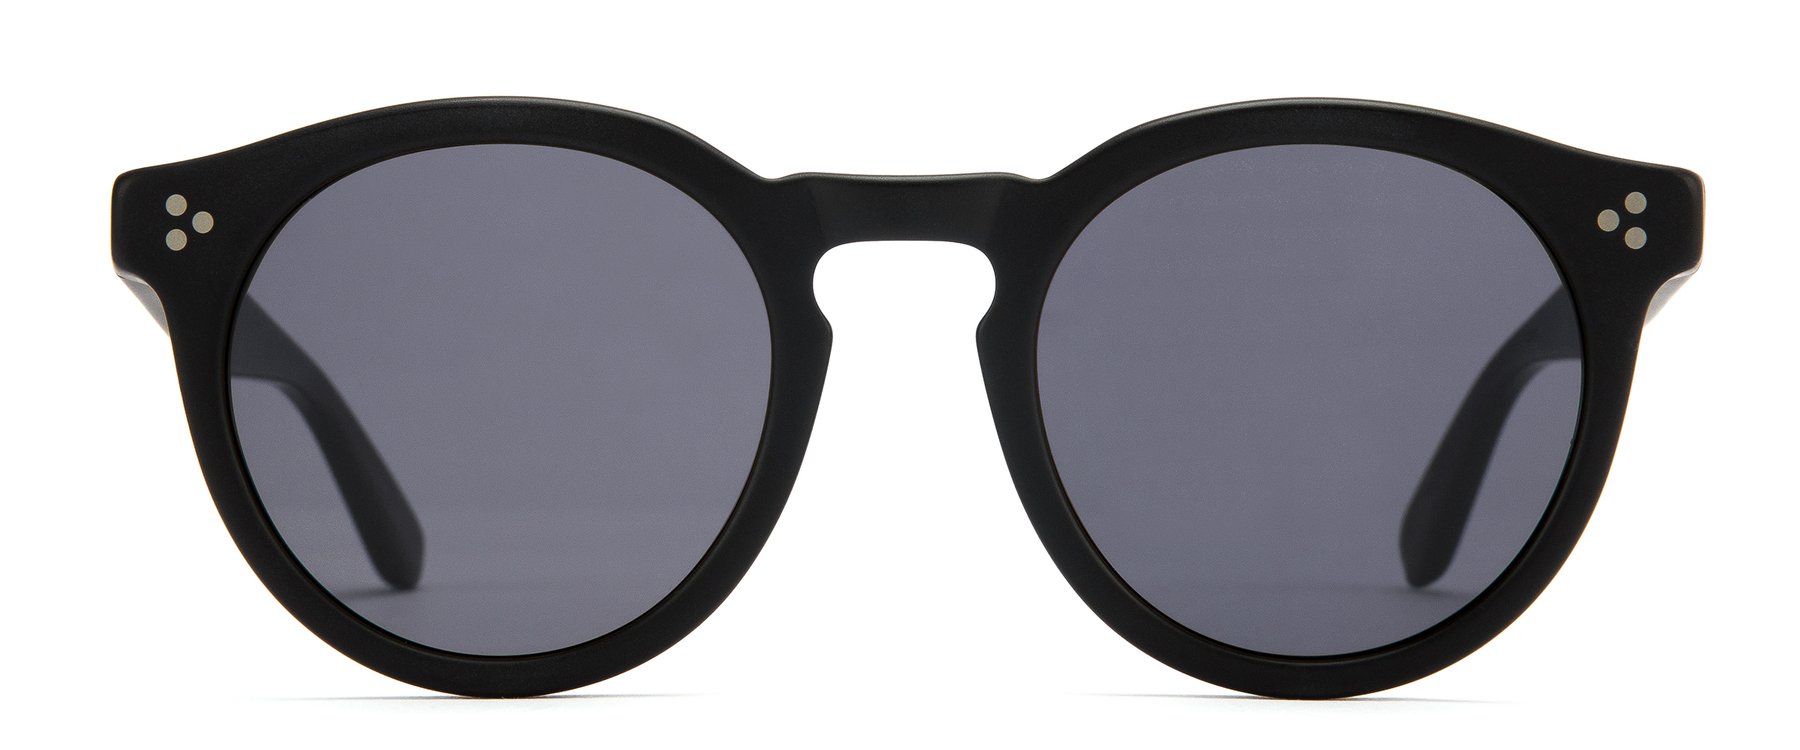 Otis High Noon Polarized Sunglasses Matte Black Grey Round